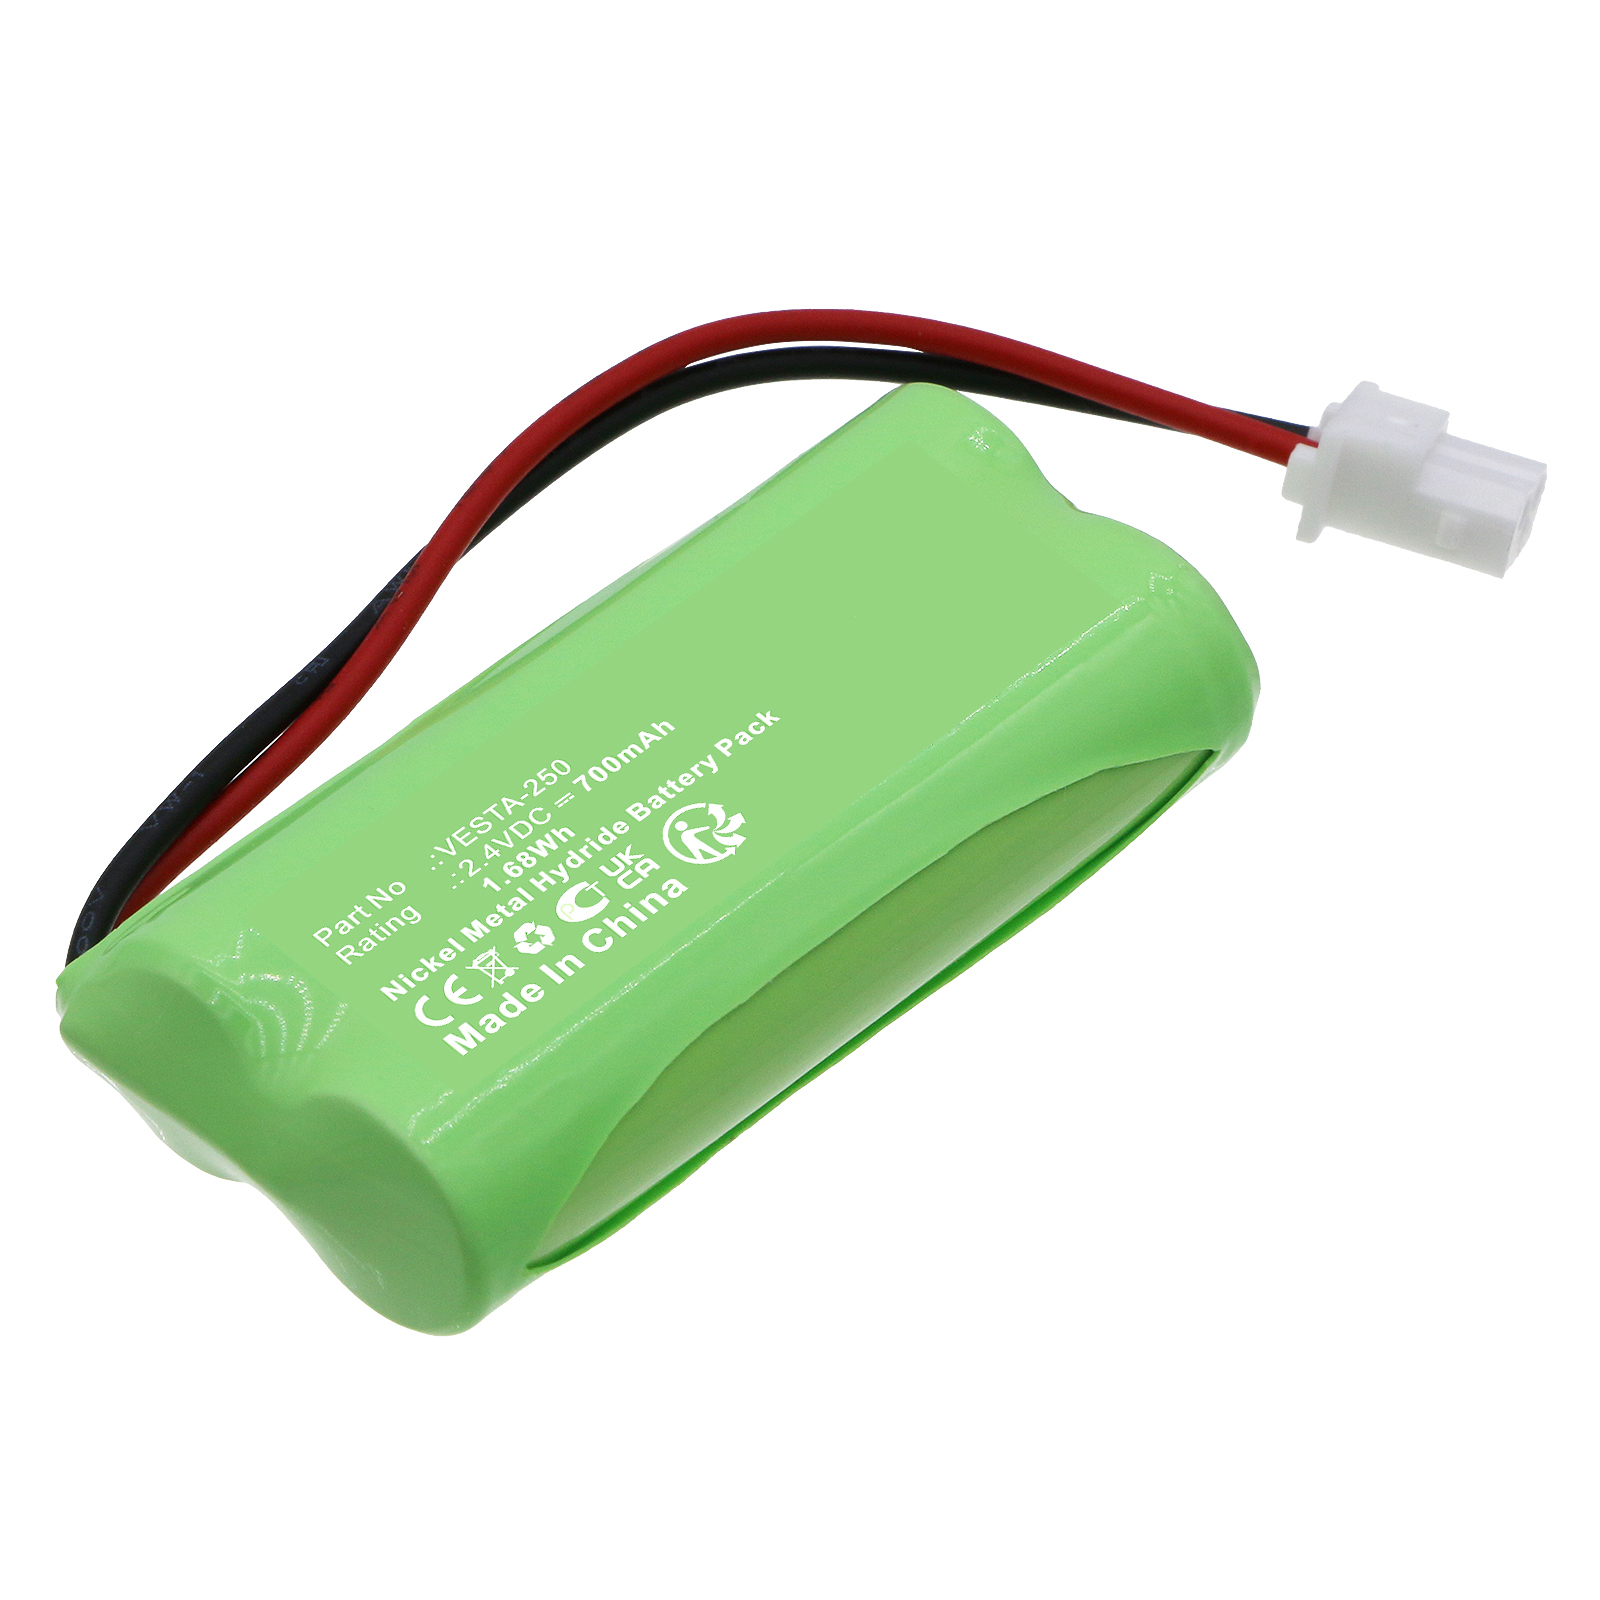 Synergy Digital Alarm System Battery, Compatible with Vesta VESTA-250 Alarm System Battery (Ni-MH, 2.4V, 700mAh)